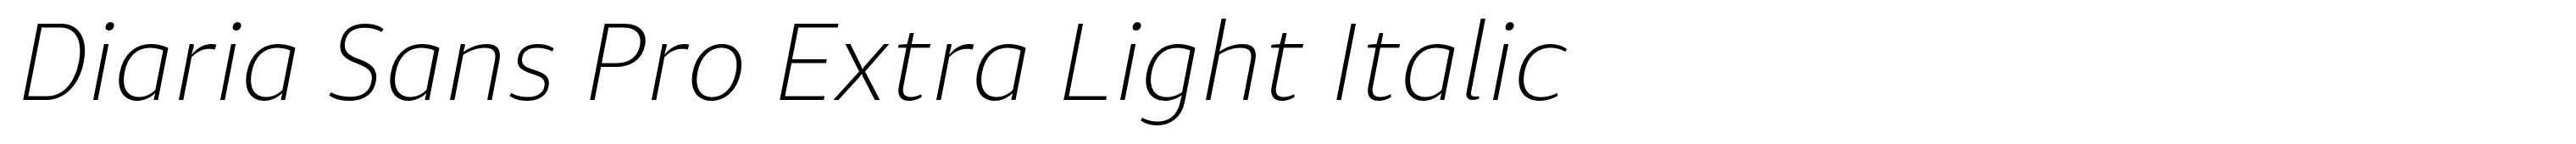 Diaria Sans Pro Extra Light Italic